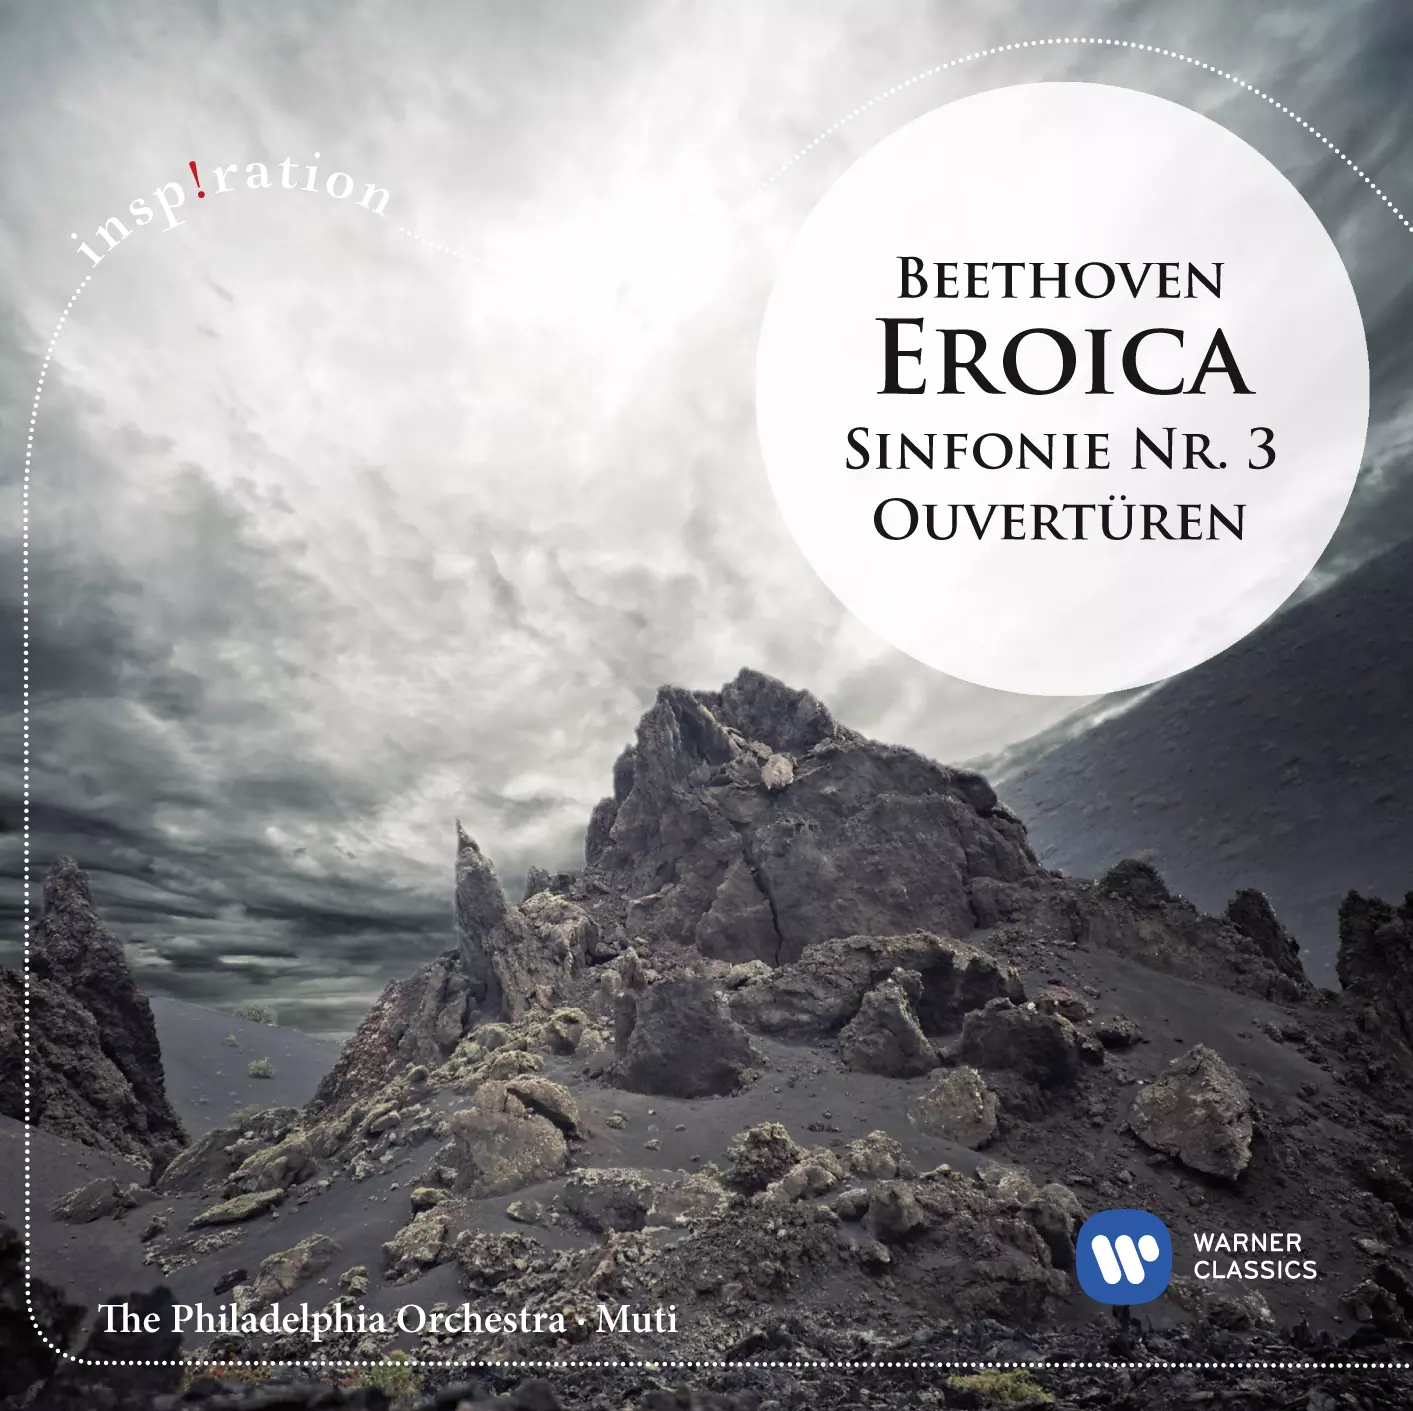 Beethoven: "Eroica" - Sinfonie Nr. 3 (Inspiration)